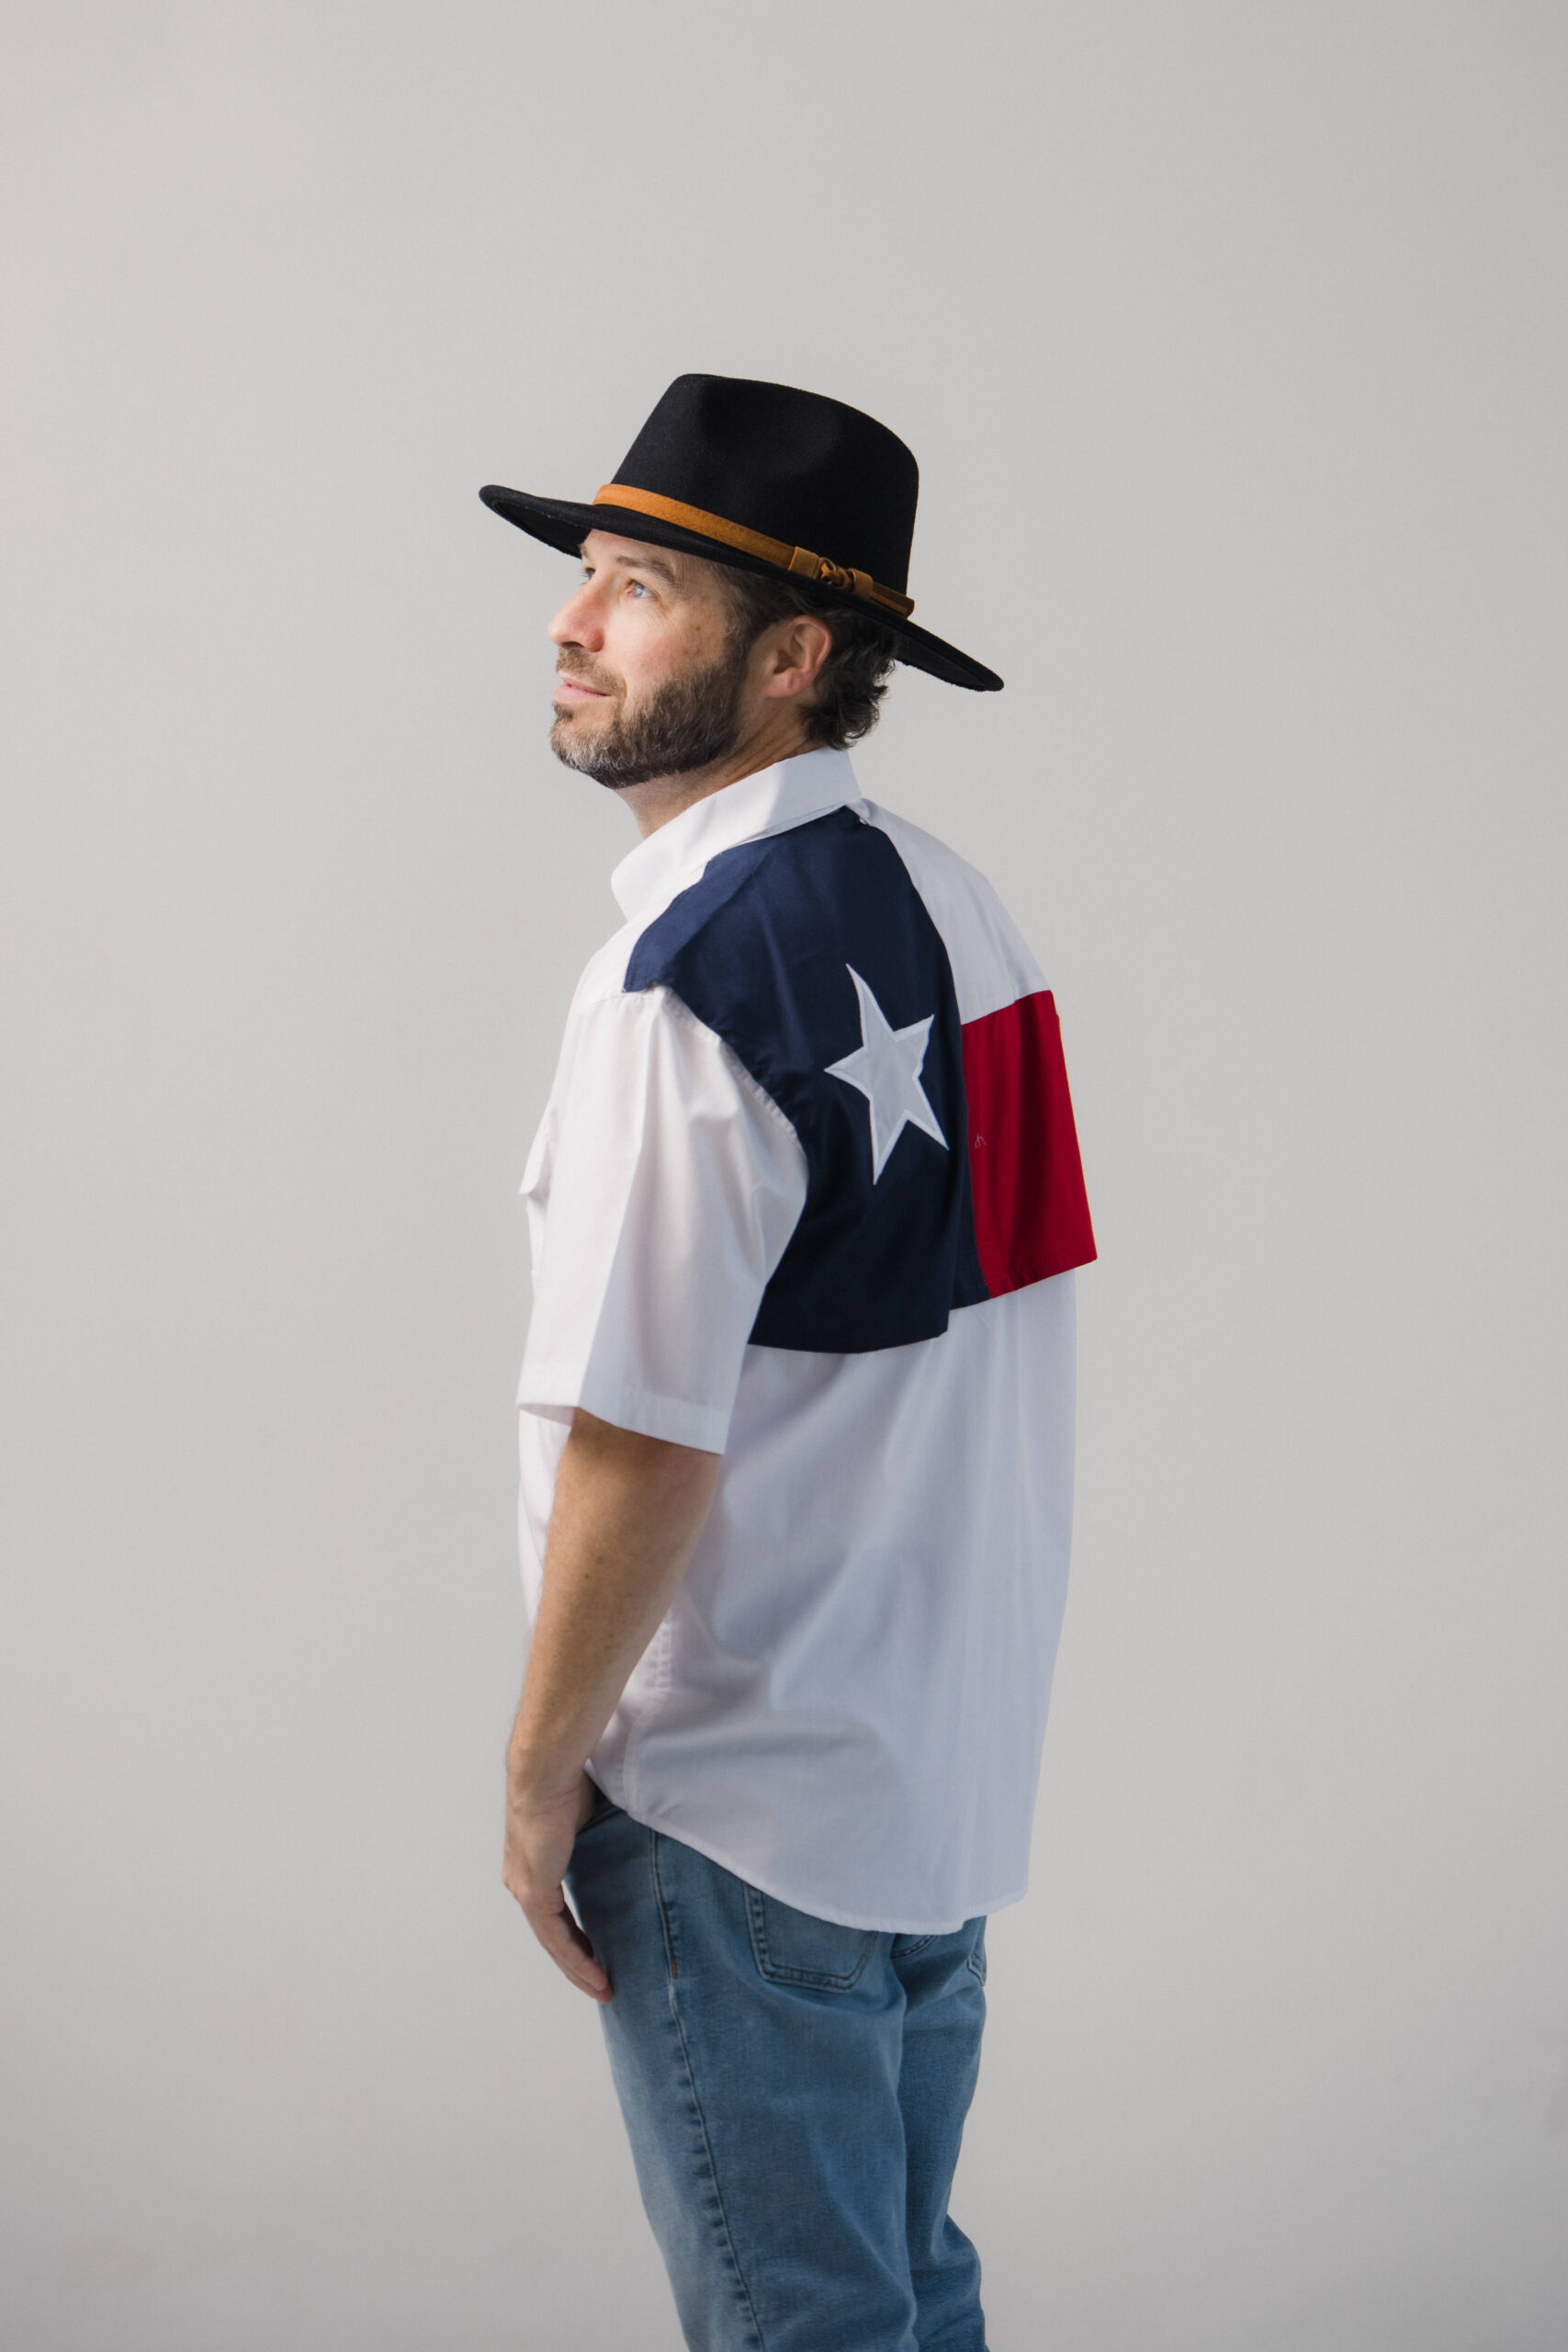 Men's Texas Flag Short Sleeve Fishing Shirt